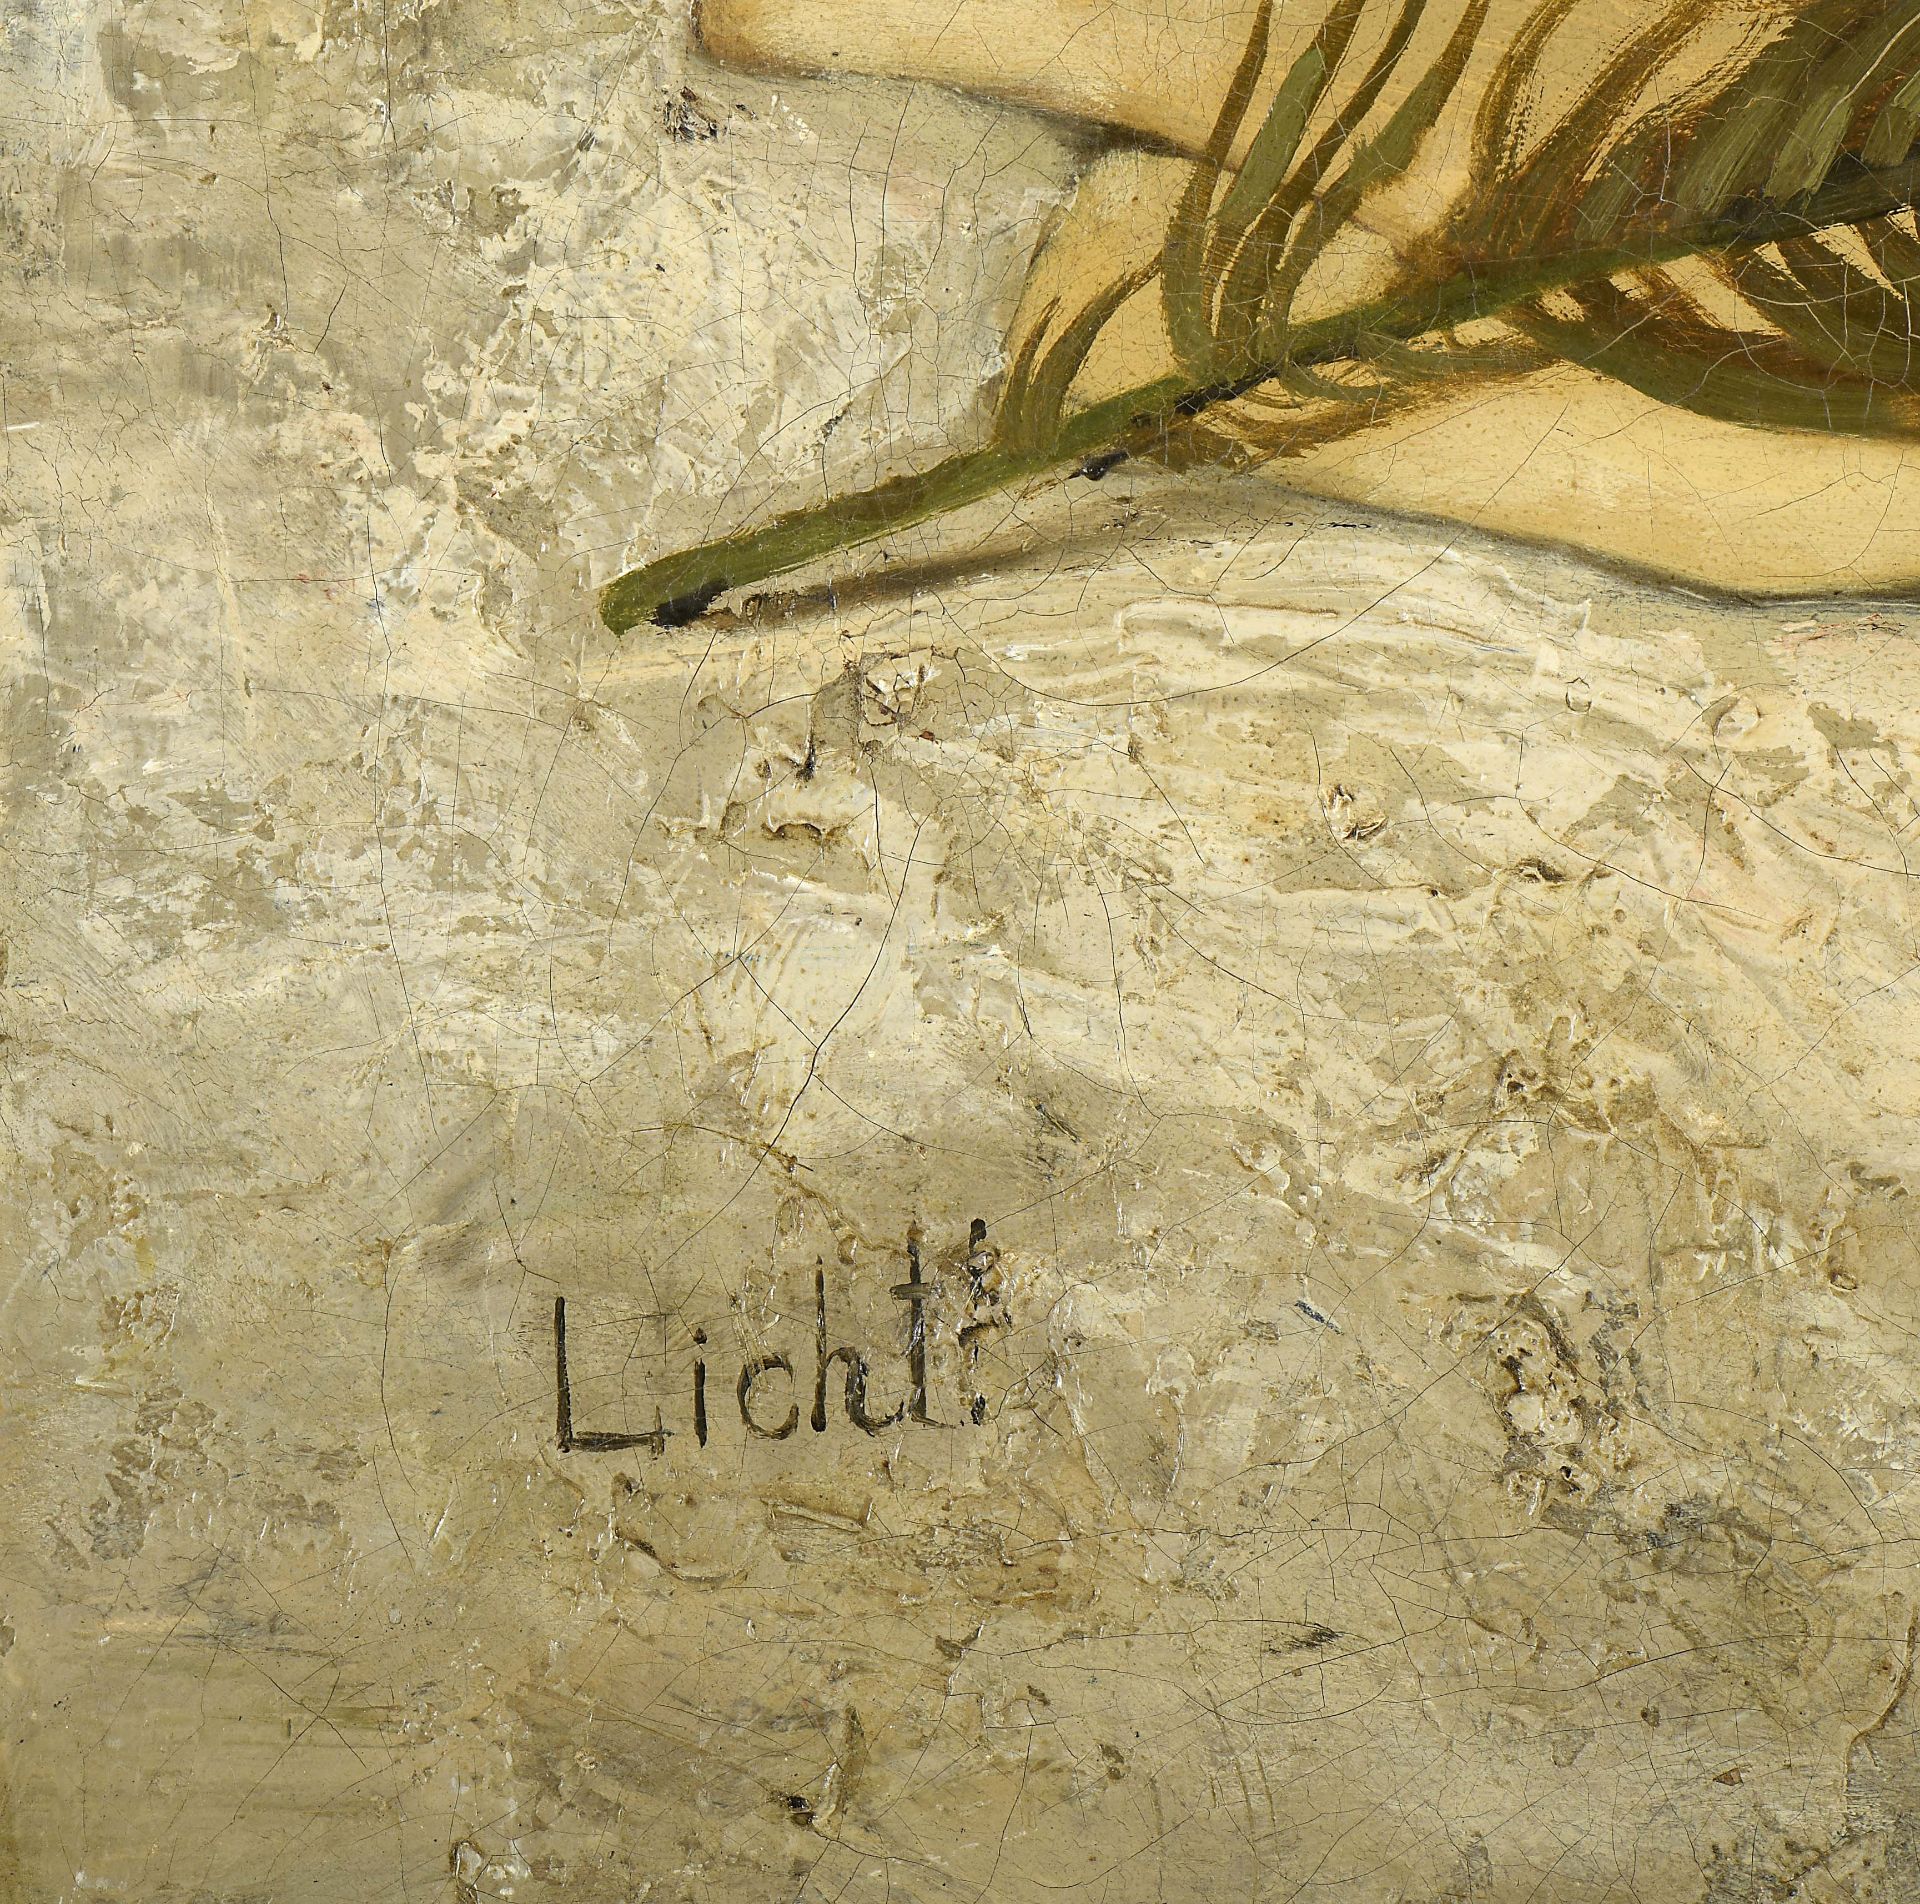 Licht - Image 4 of 6